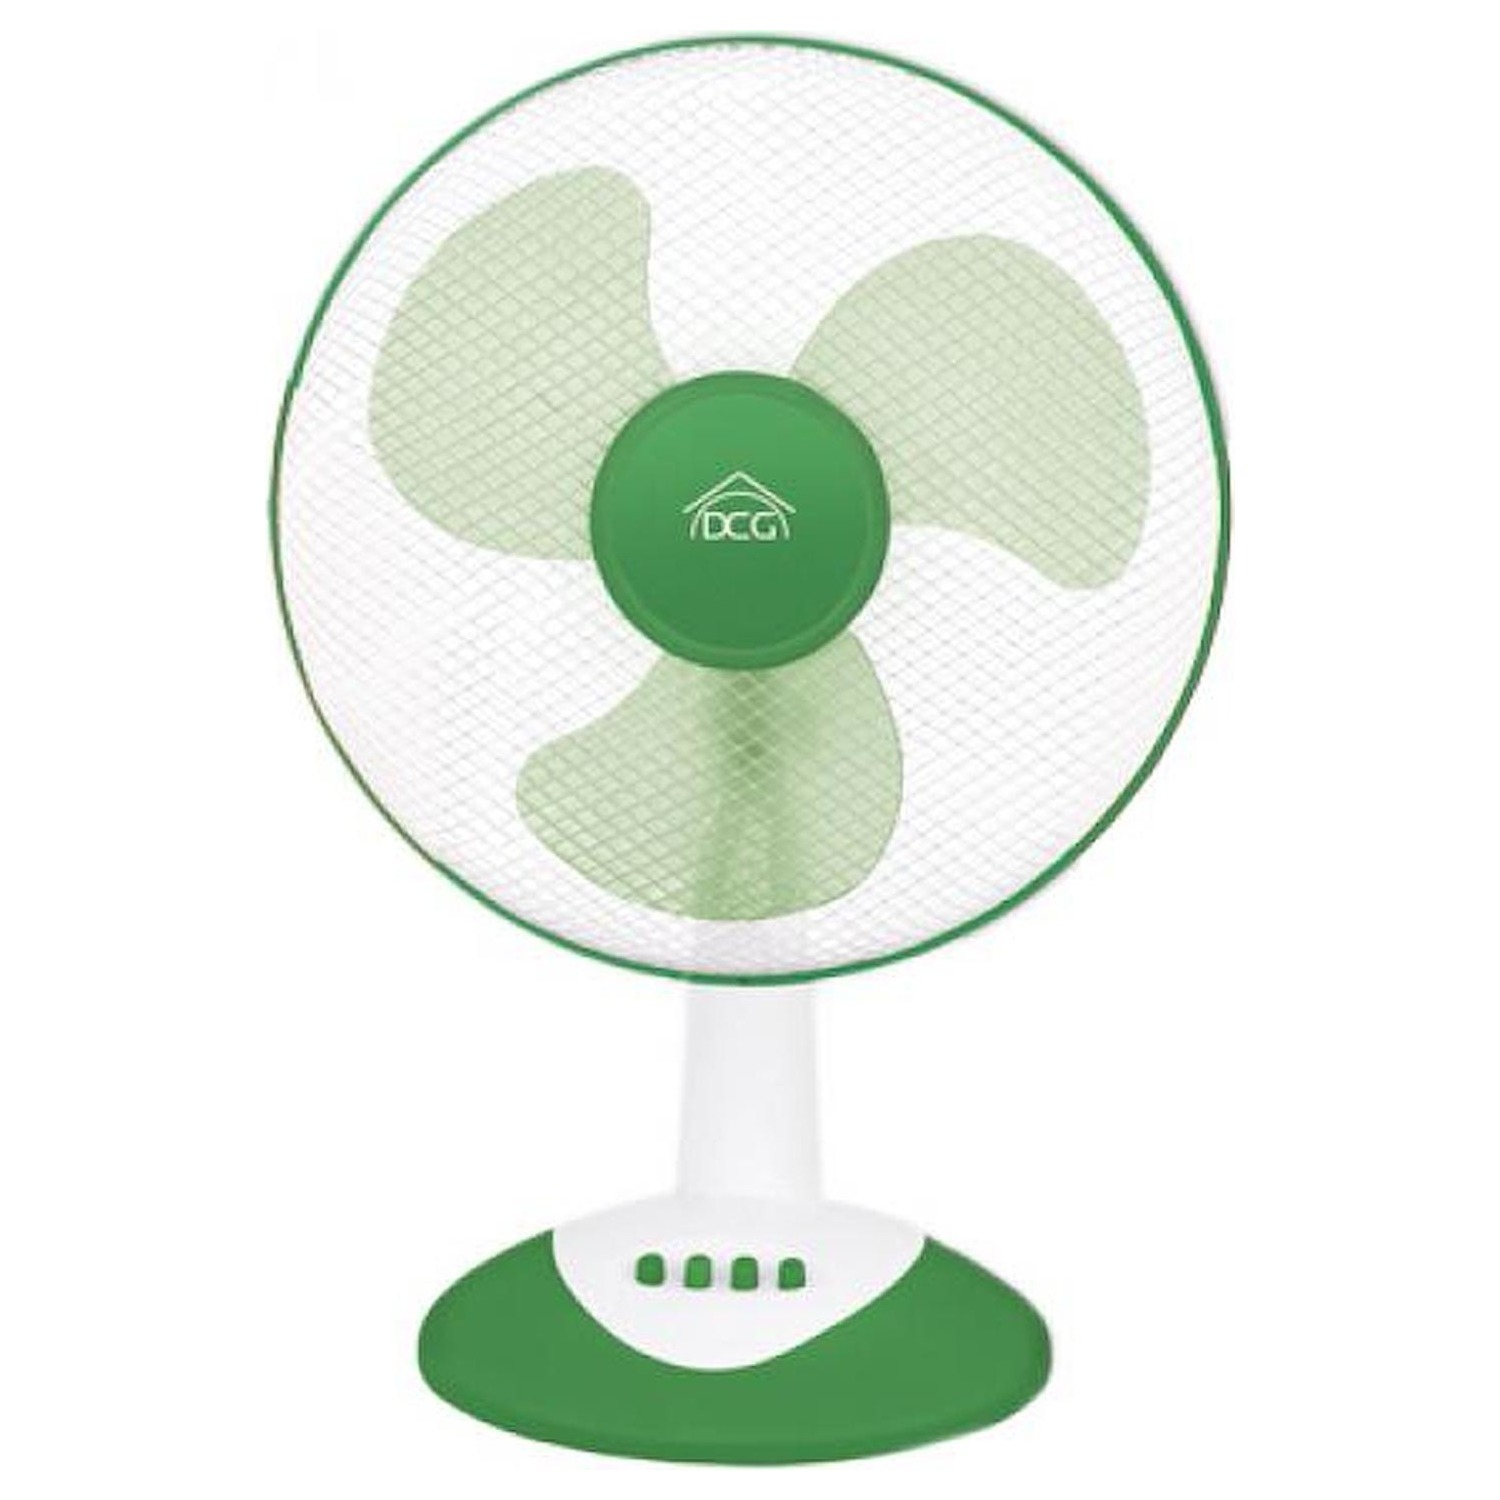 Immagine per Ventilatore da tavolo DCG VE1615G verde da DIMOStore